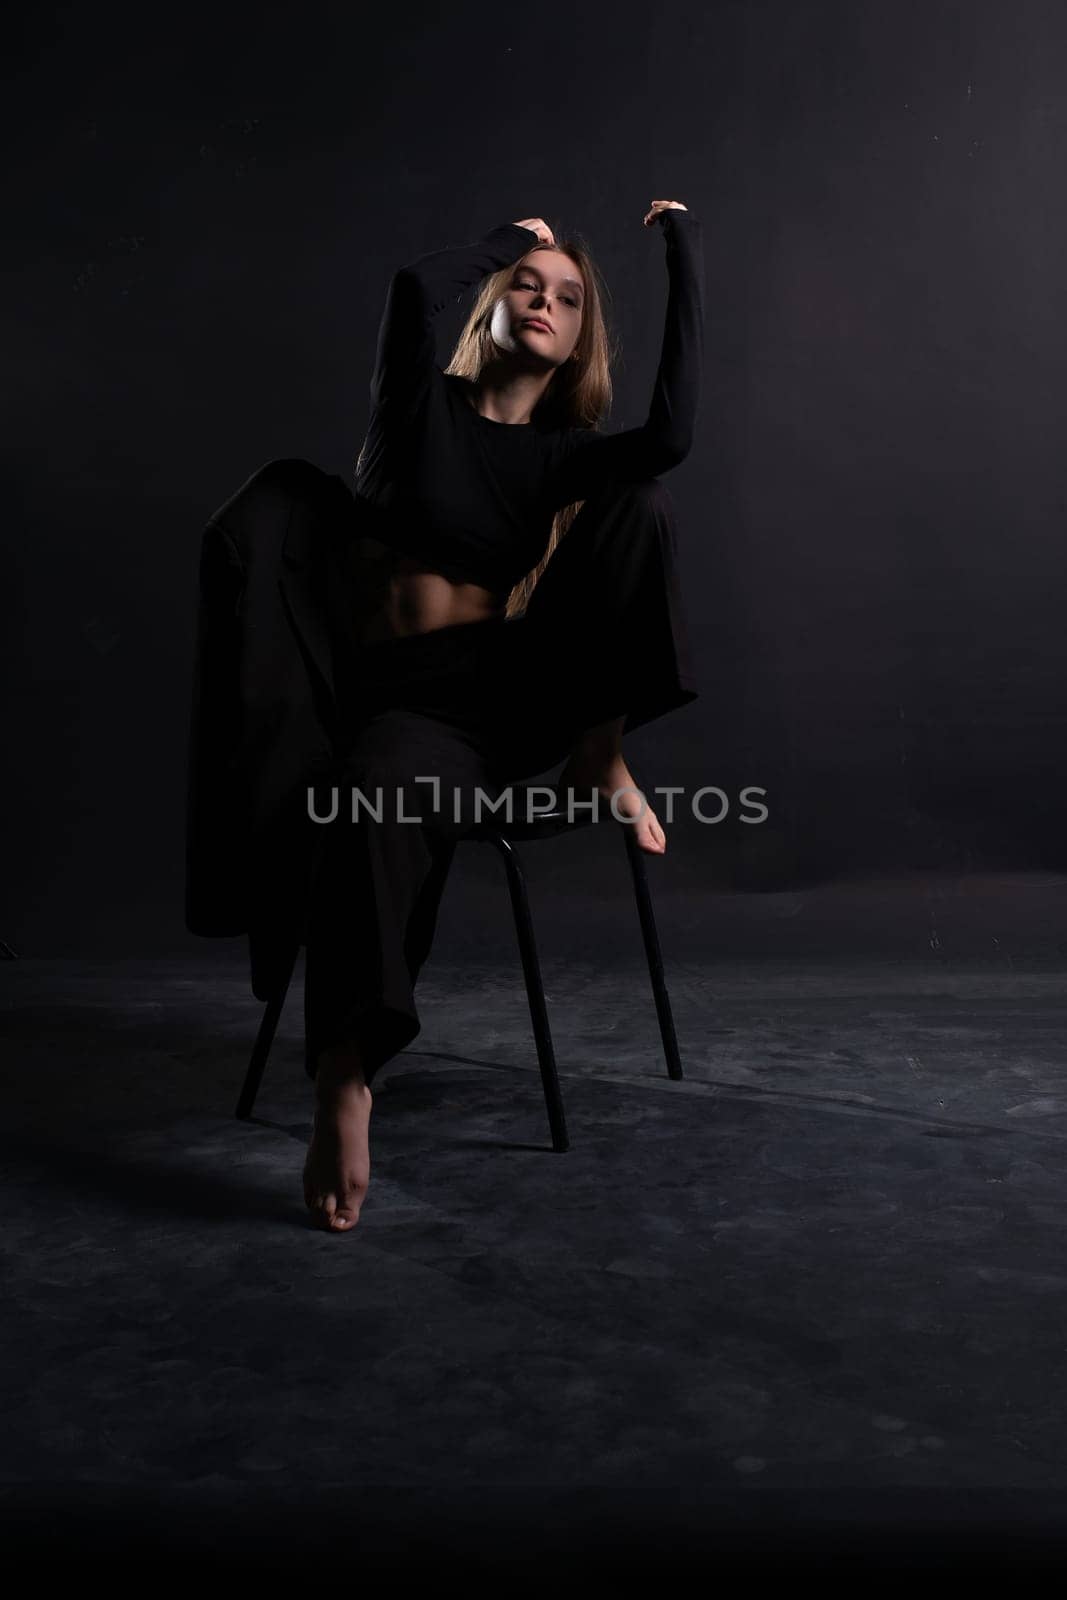 young portrait studio artist black ballet woman female ballerina sitting girl performer